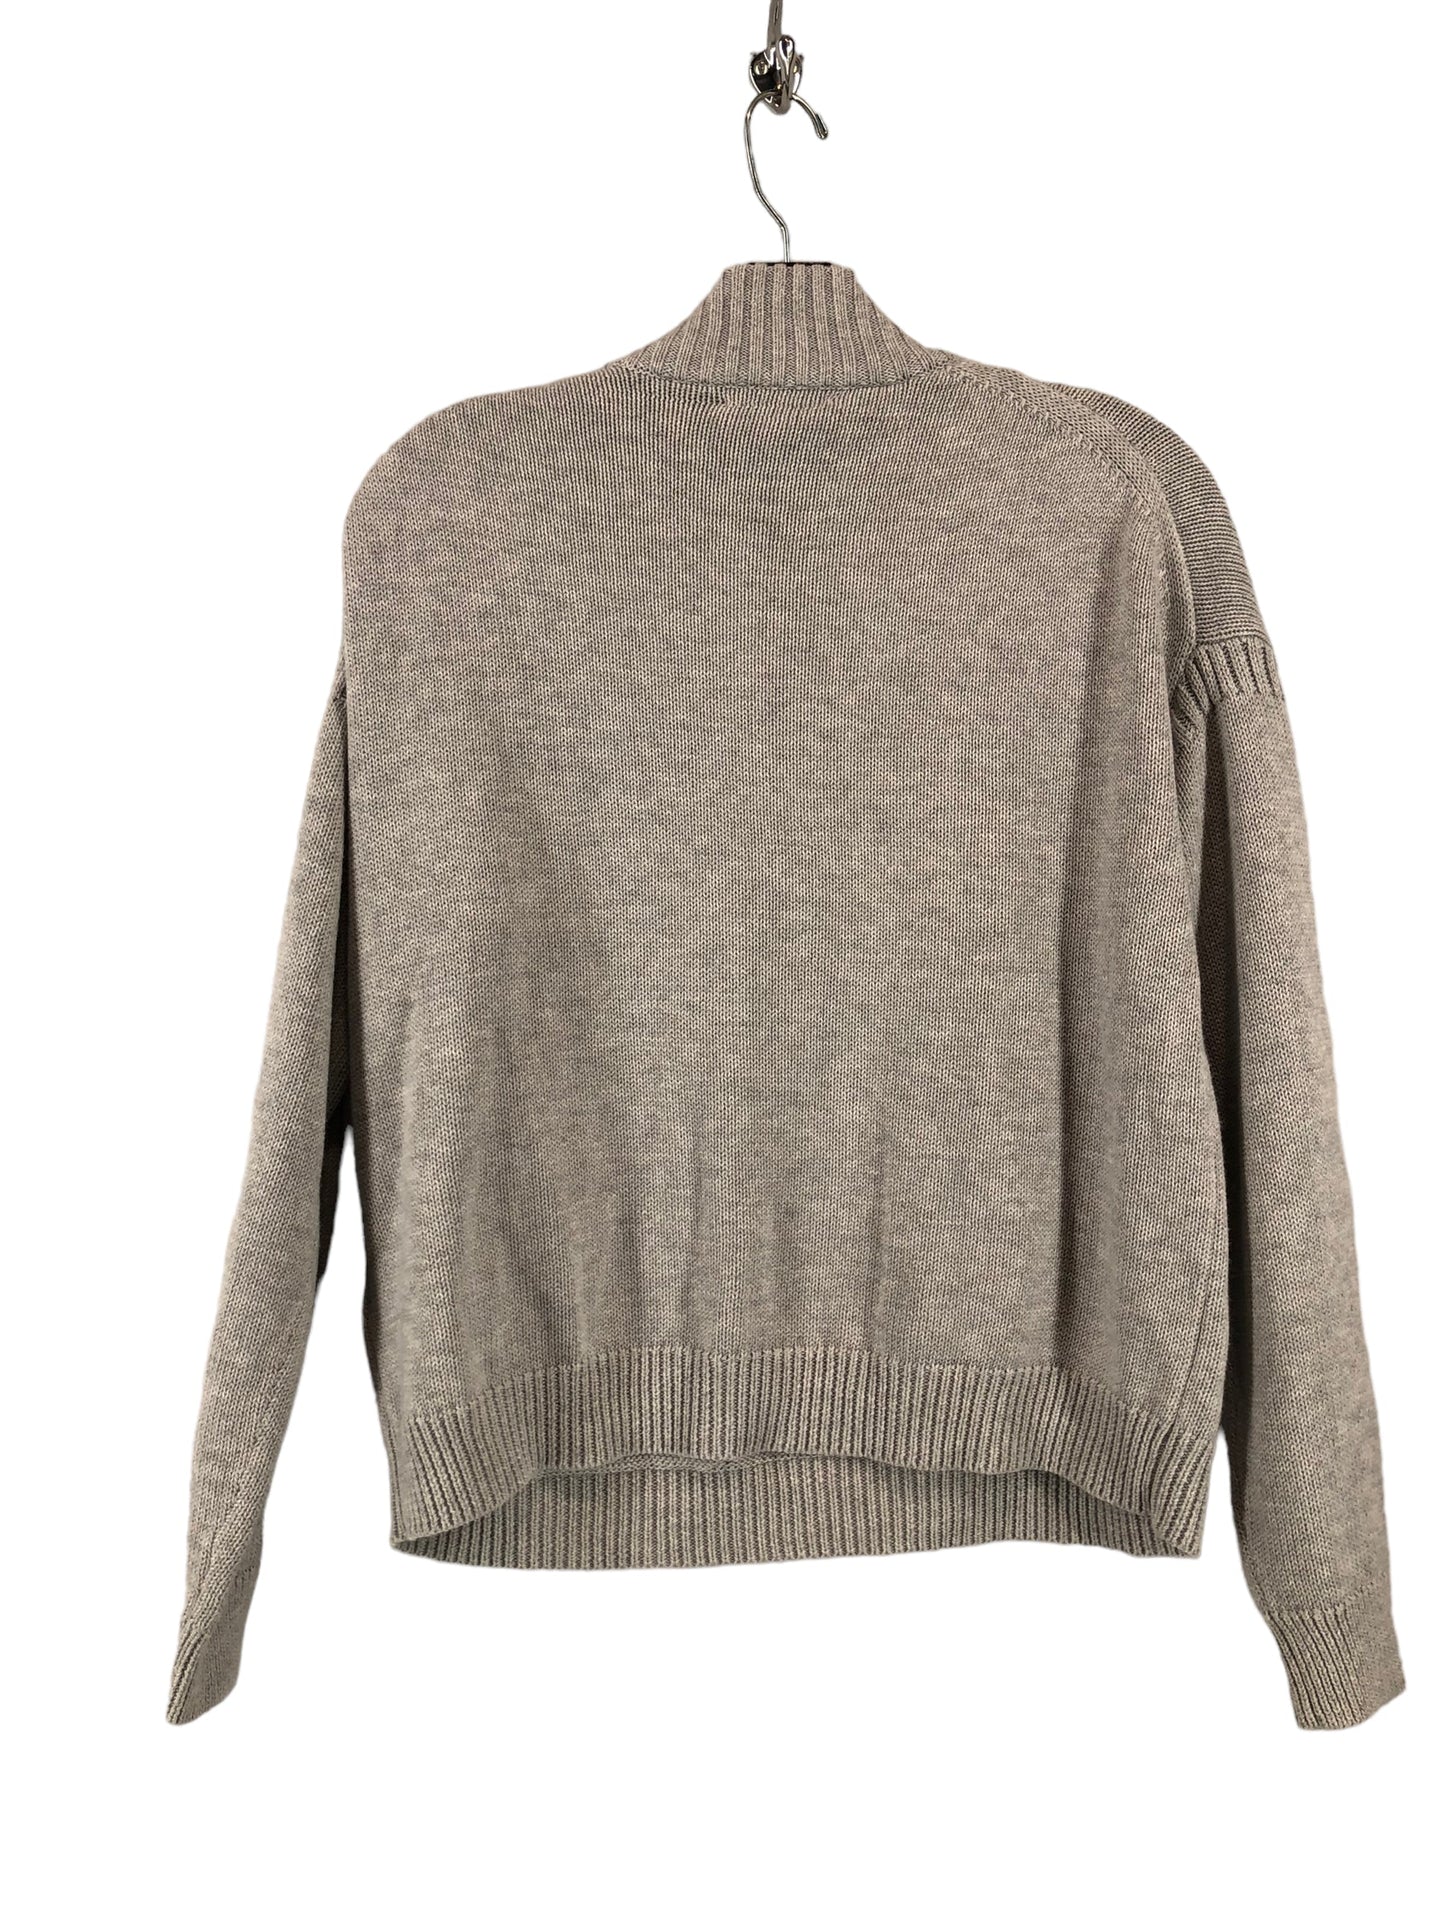 Sweater By J Crew  Size: Xs